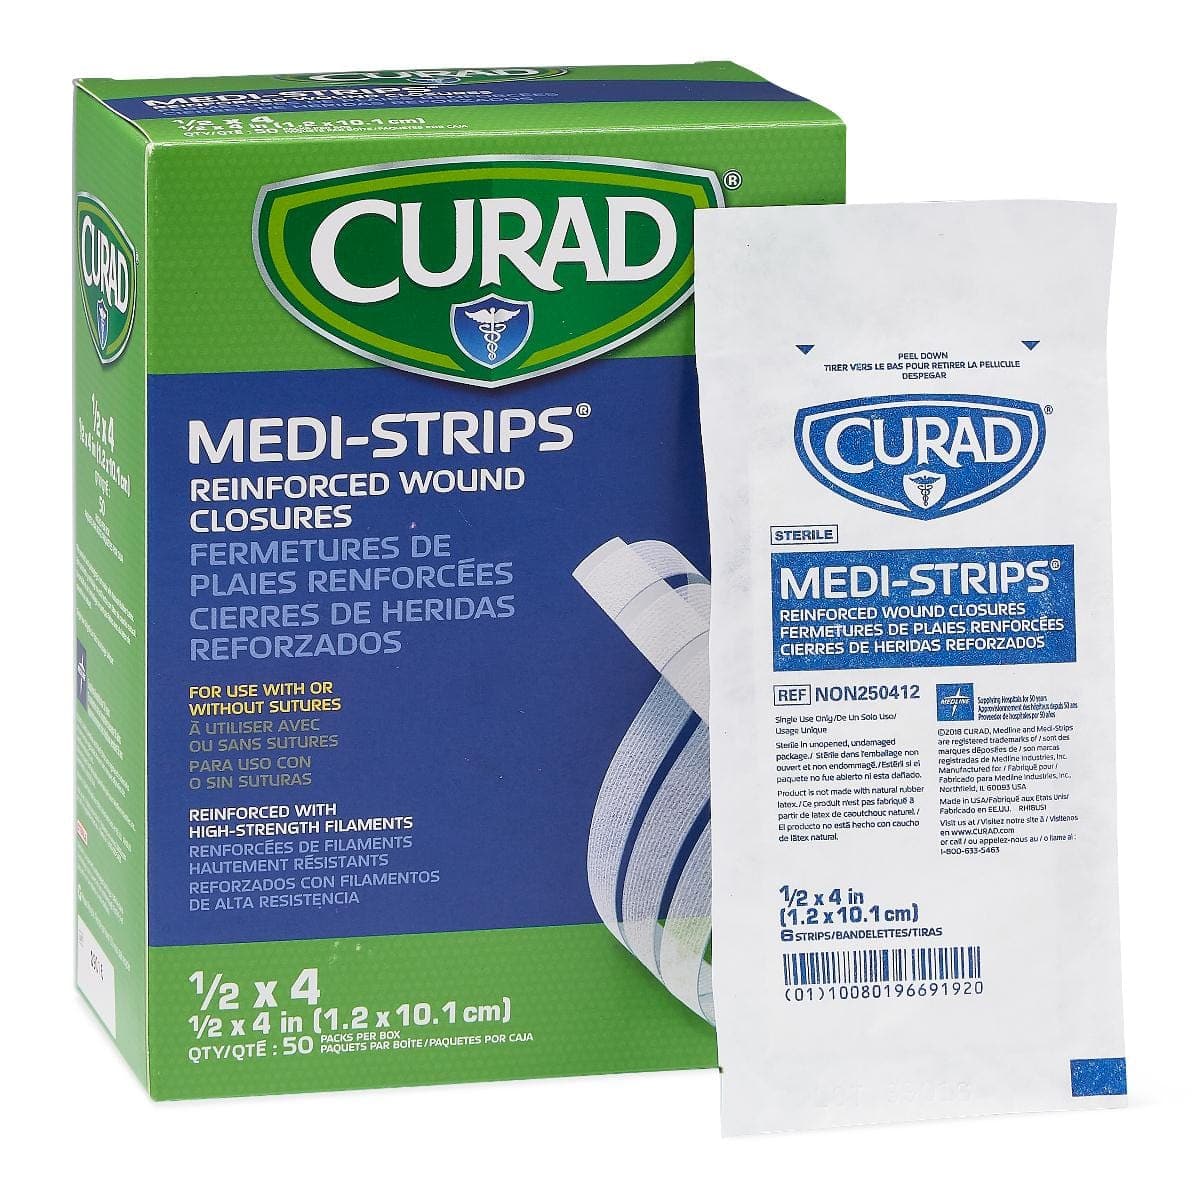 Medline 1/2"x4" / Box of 300 Medline CURAD Medi-Strip Reinforced Wound Closures